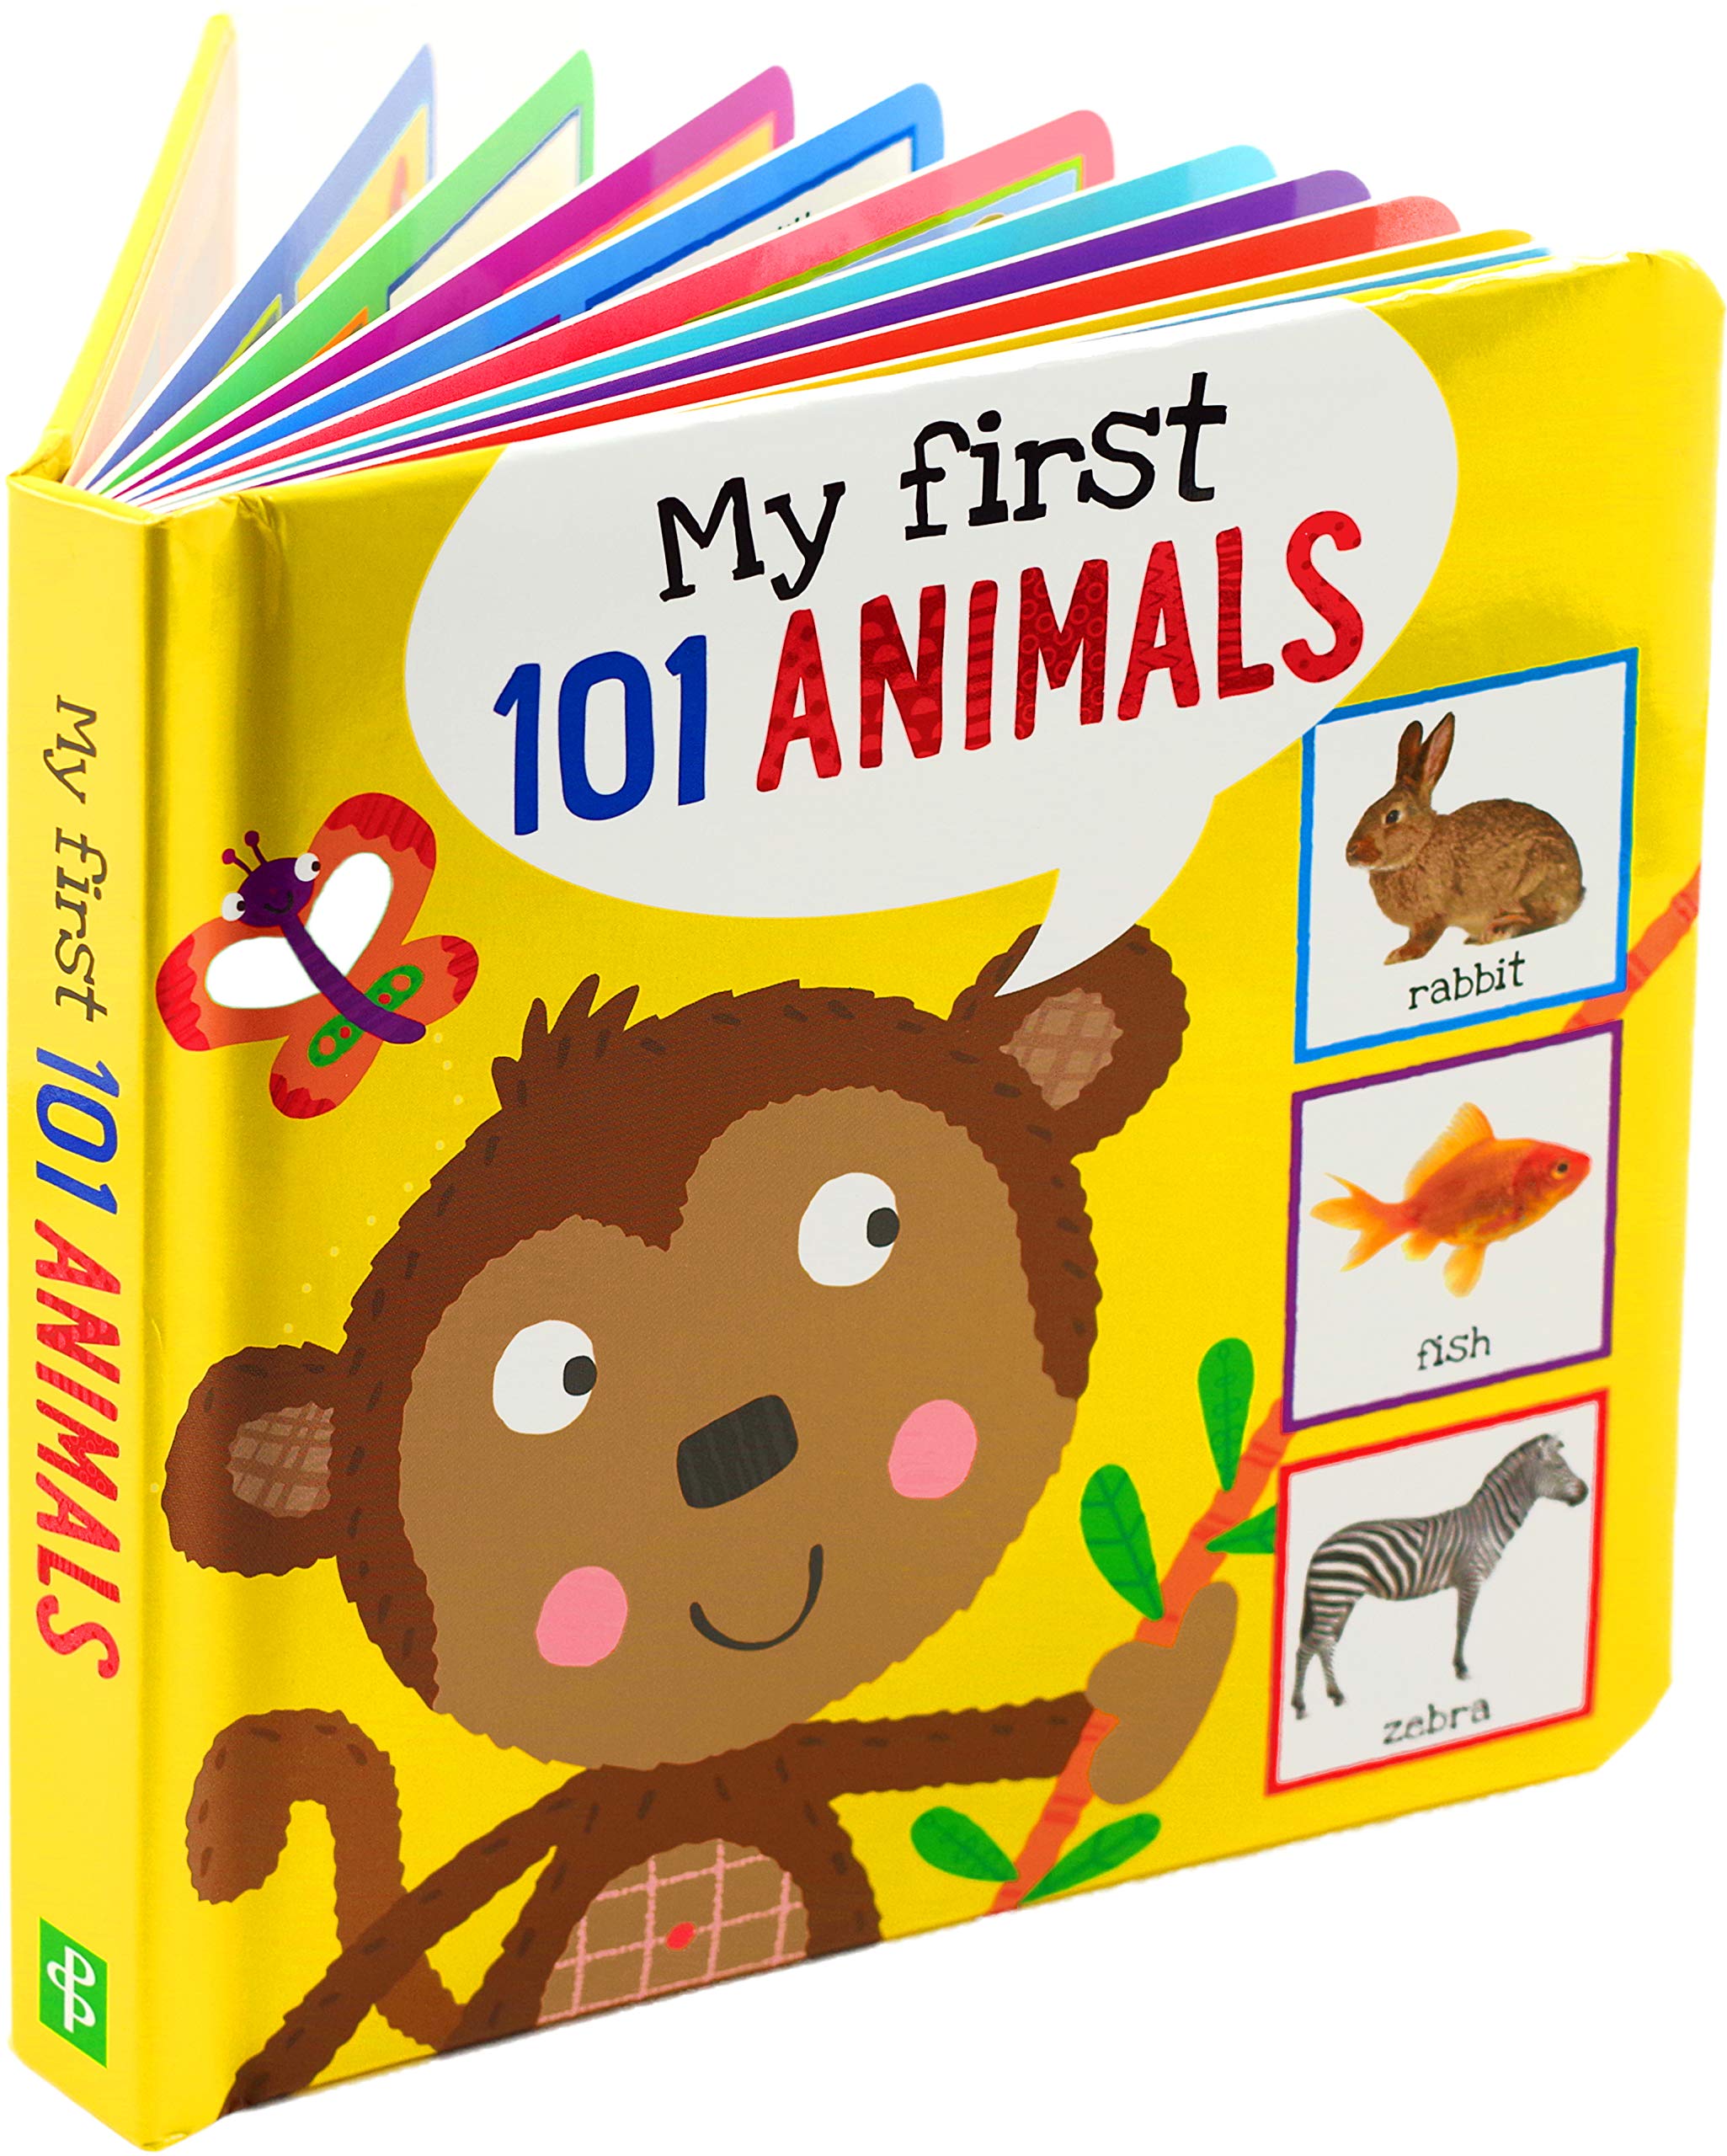 My First 101 ANIMALS Board Book